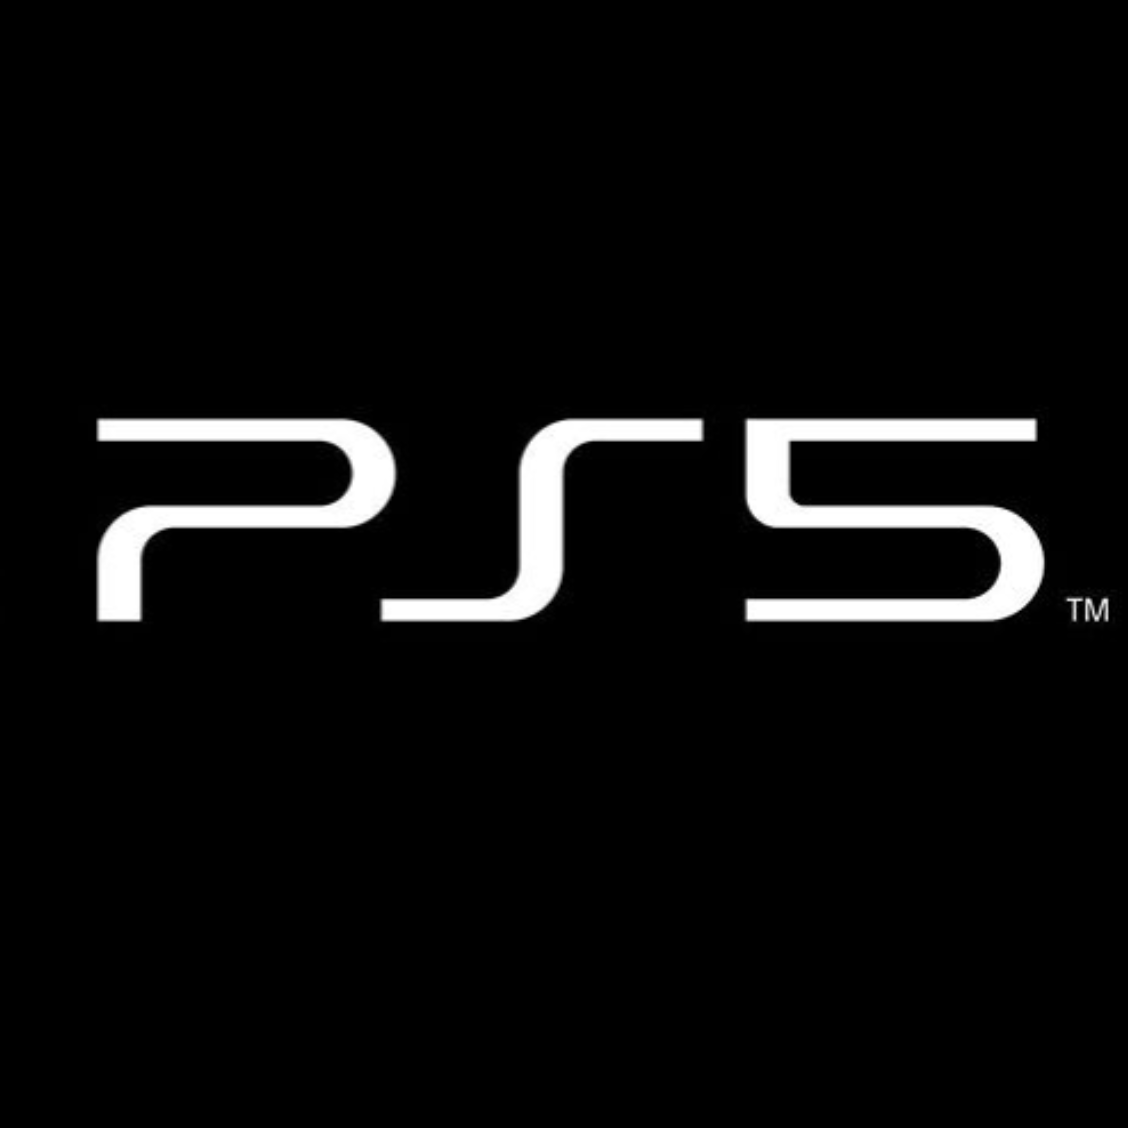 Sony onthult logo PlayStation 5 - Gamersnet.nl